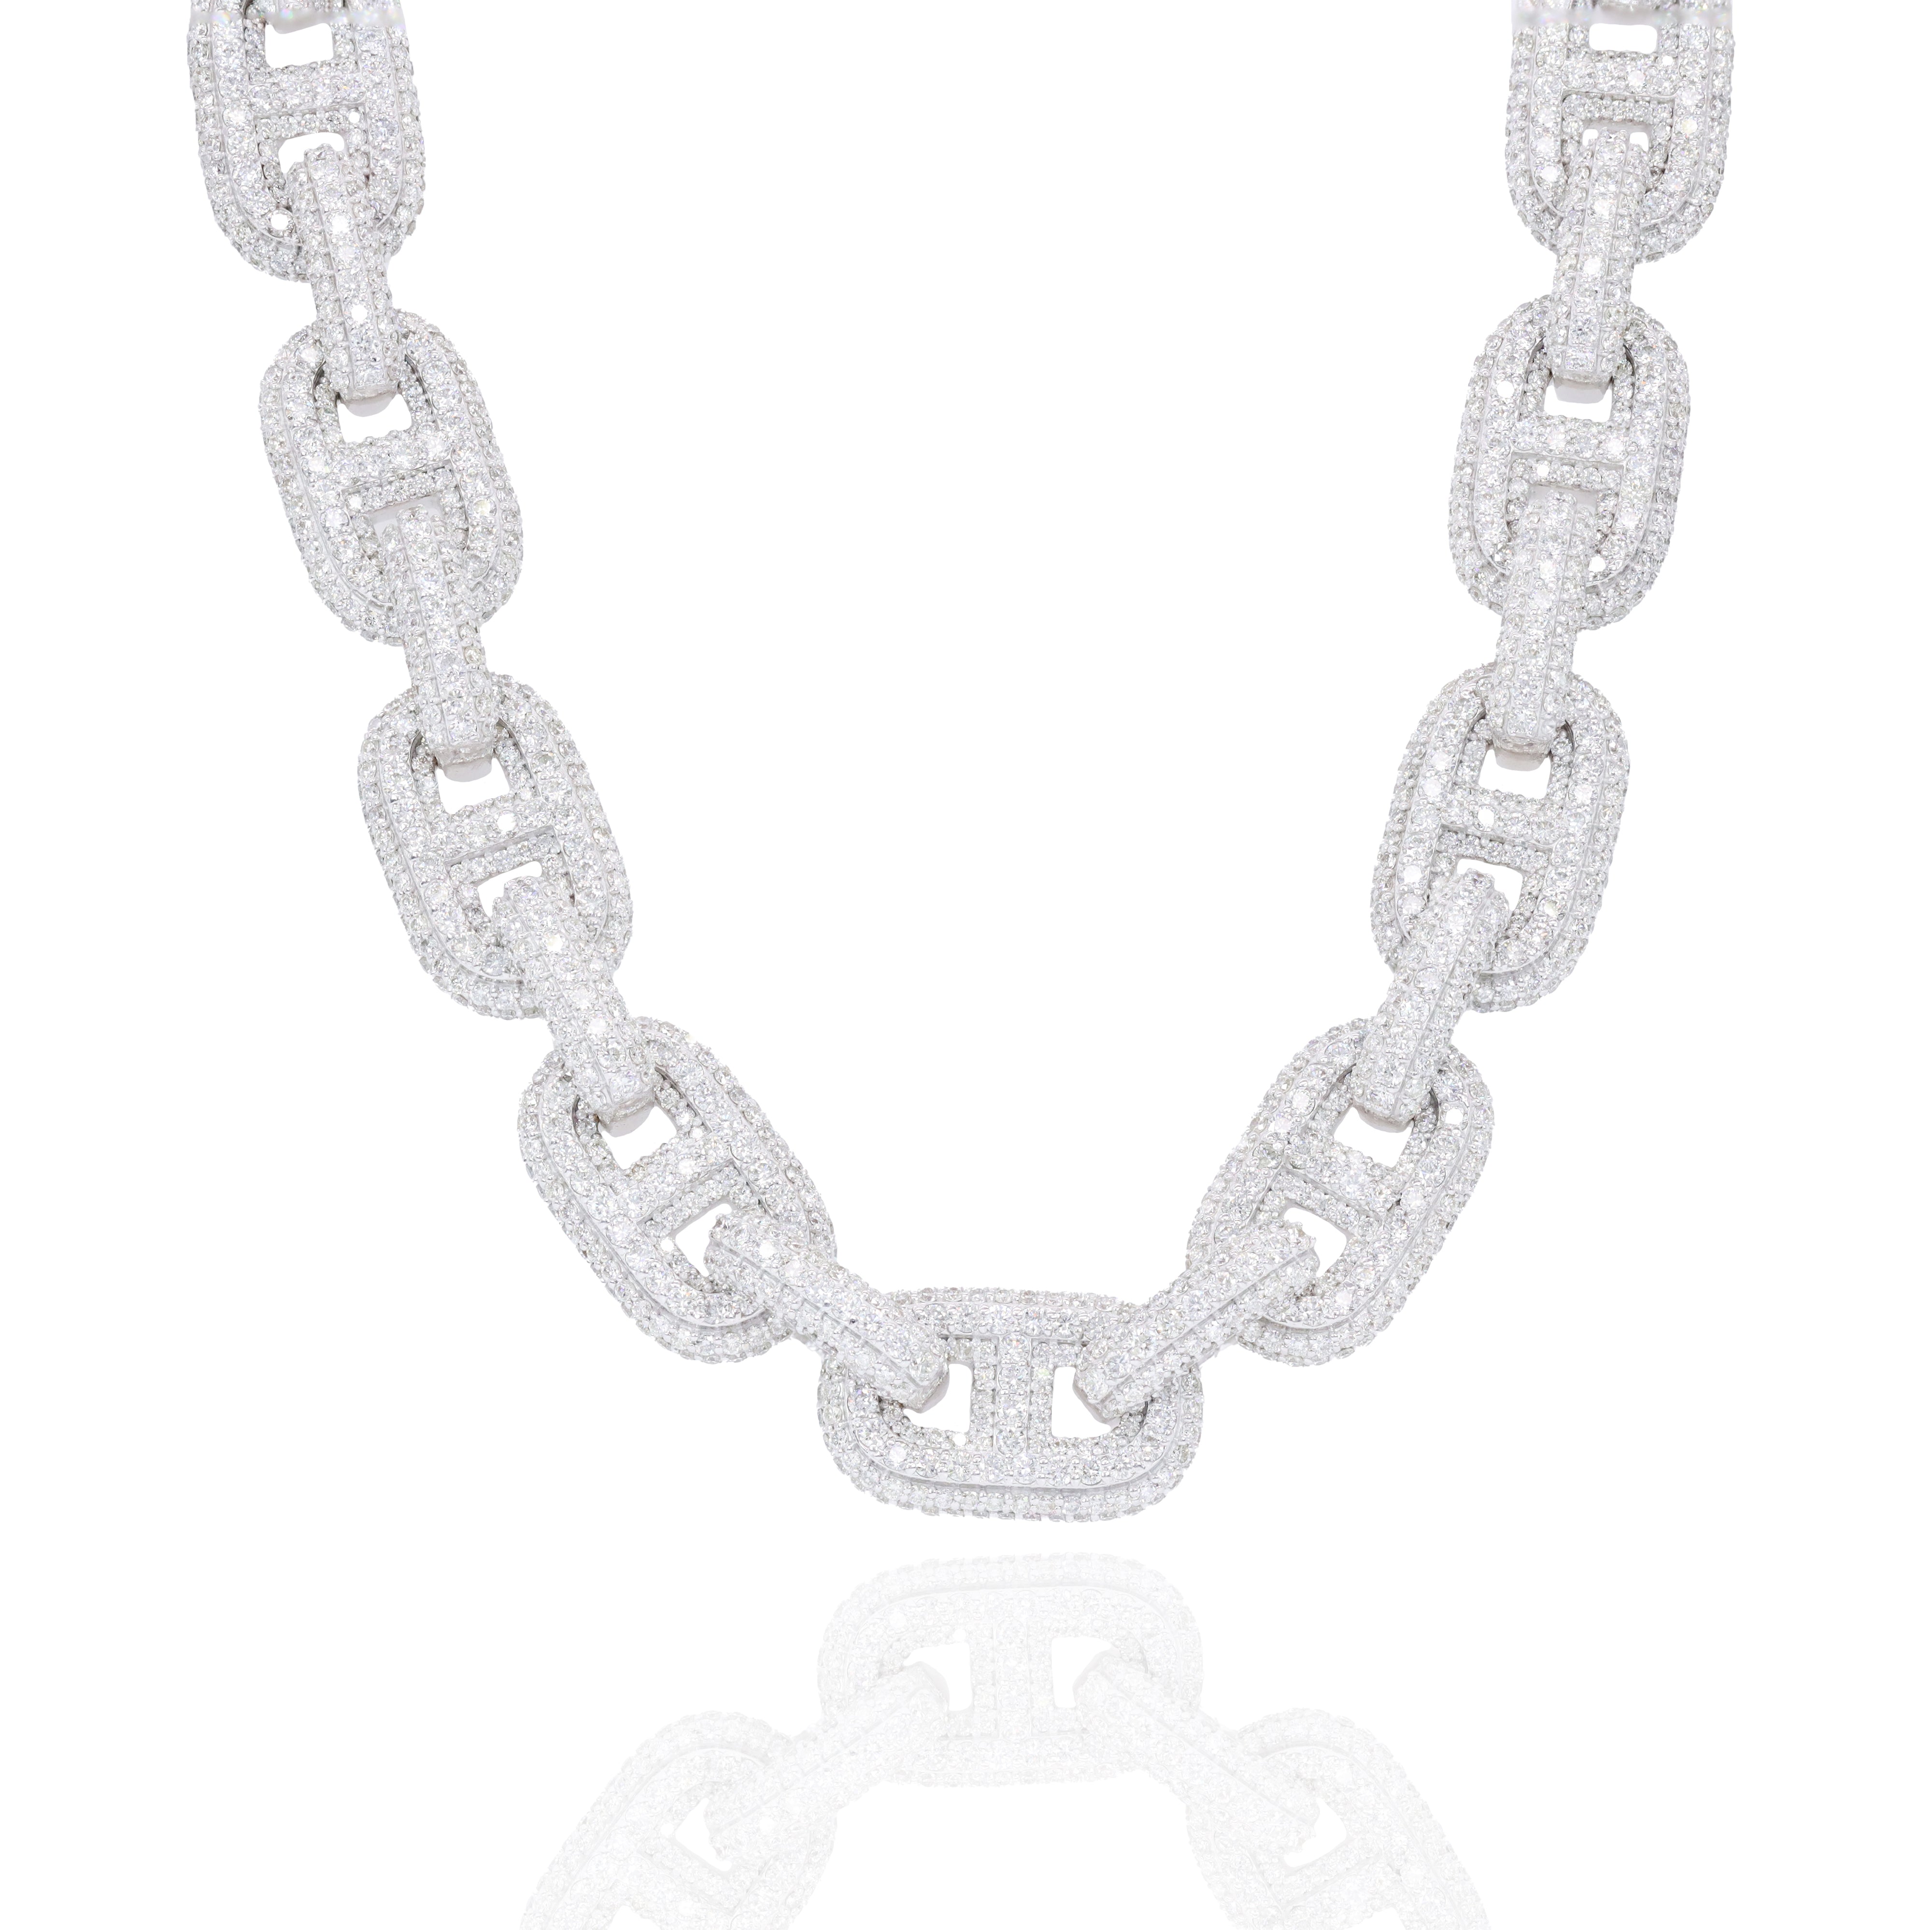 13mm Gucci Link Diamond Chain